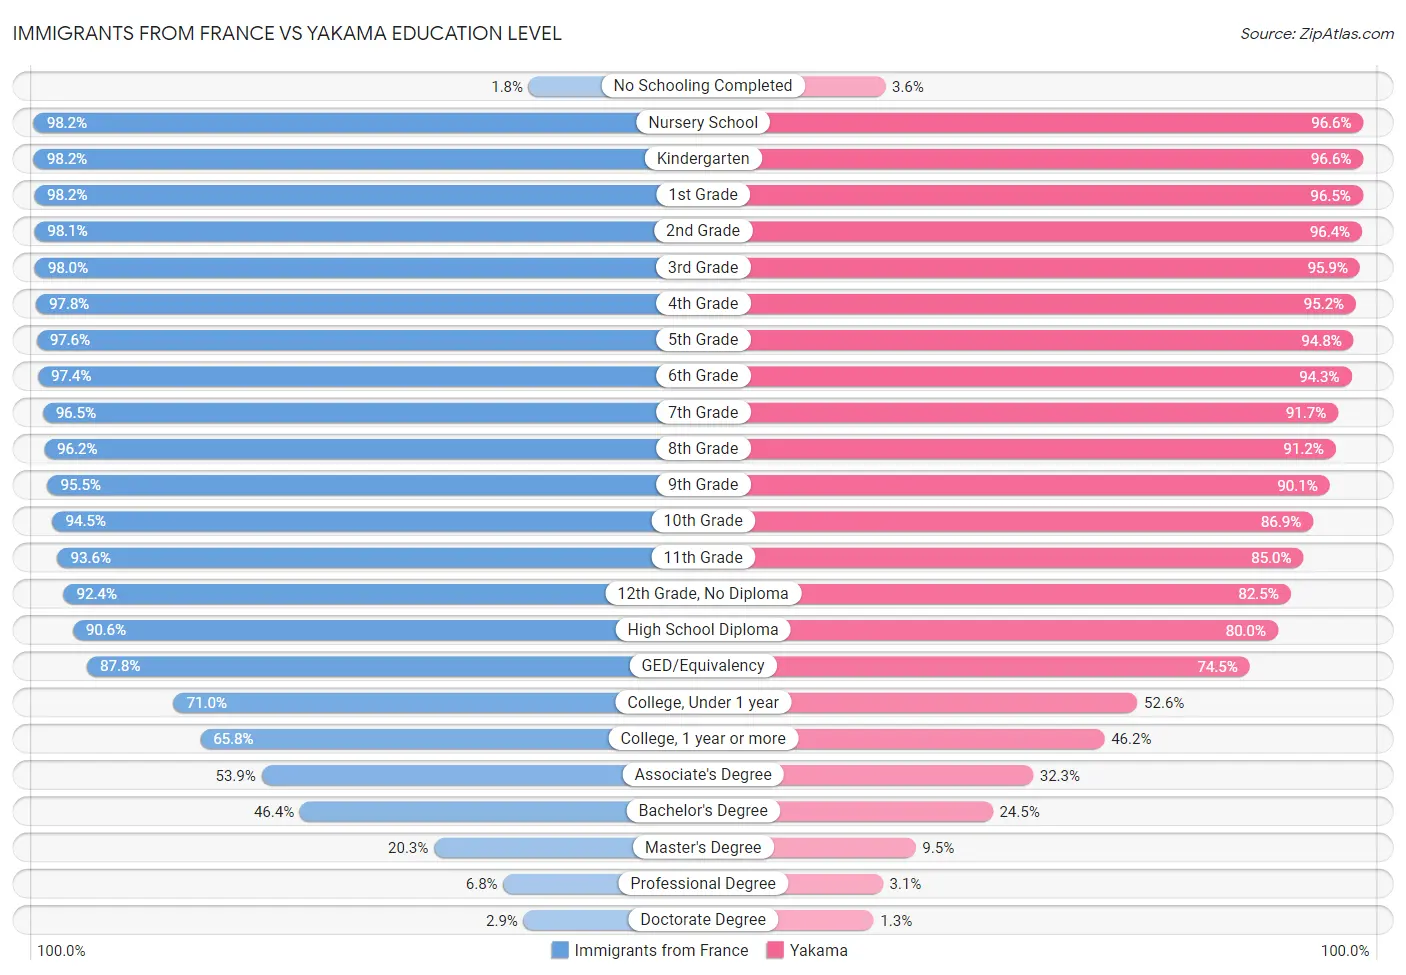 Immigrants from France vs Yakama Education Level